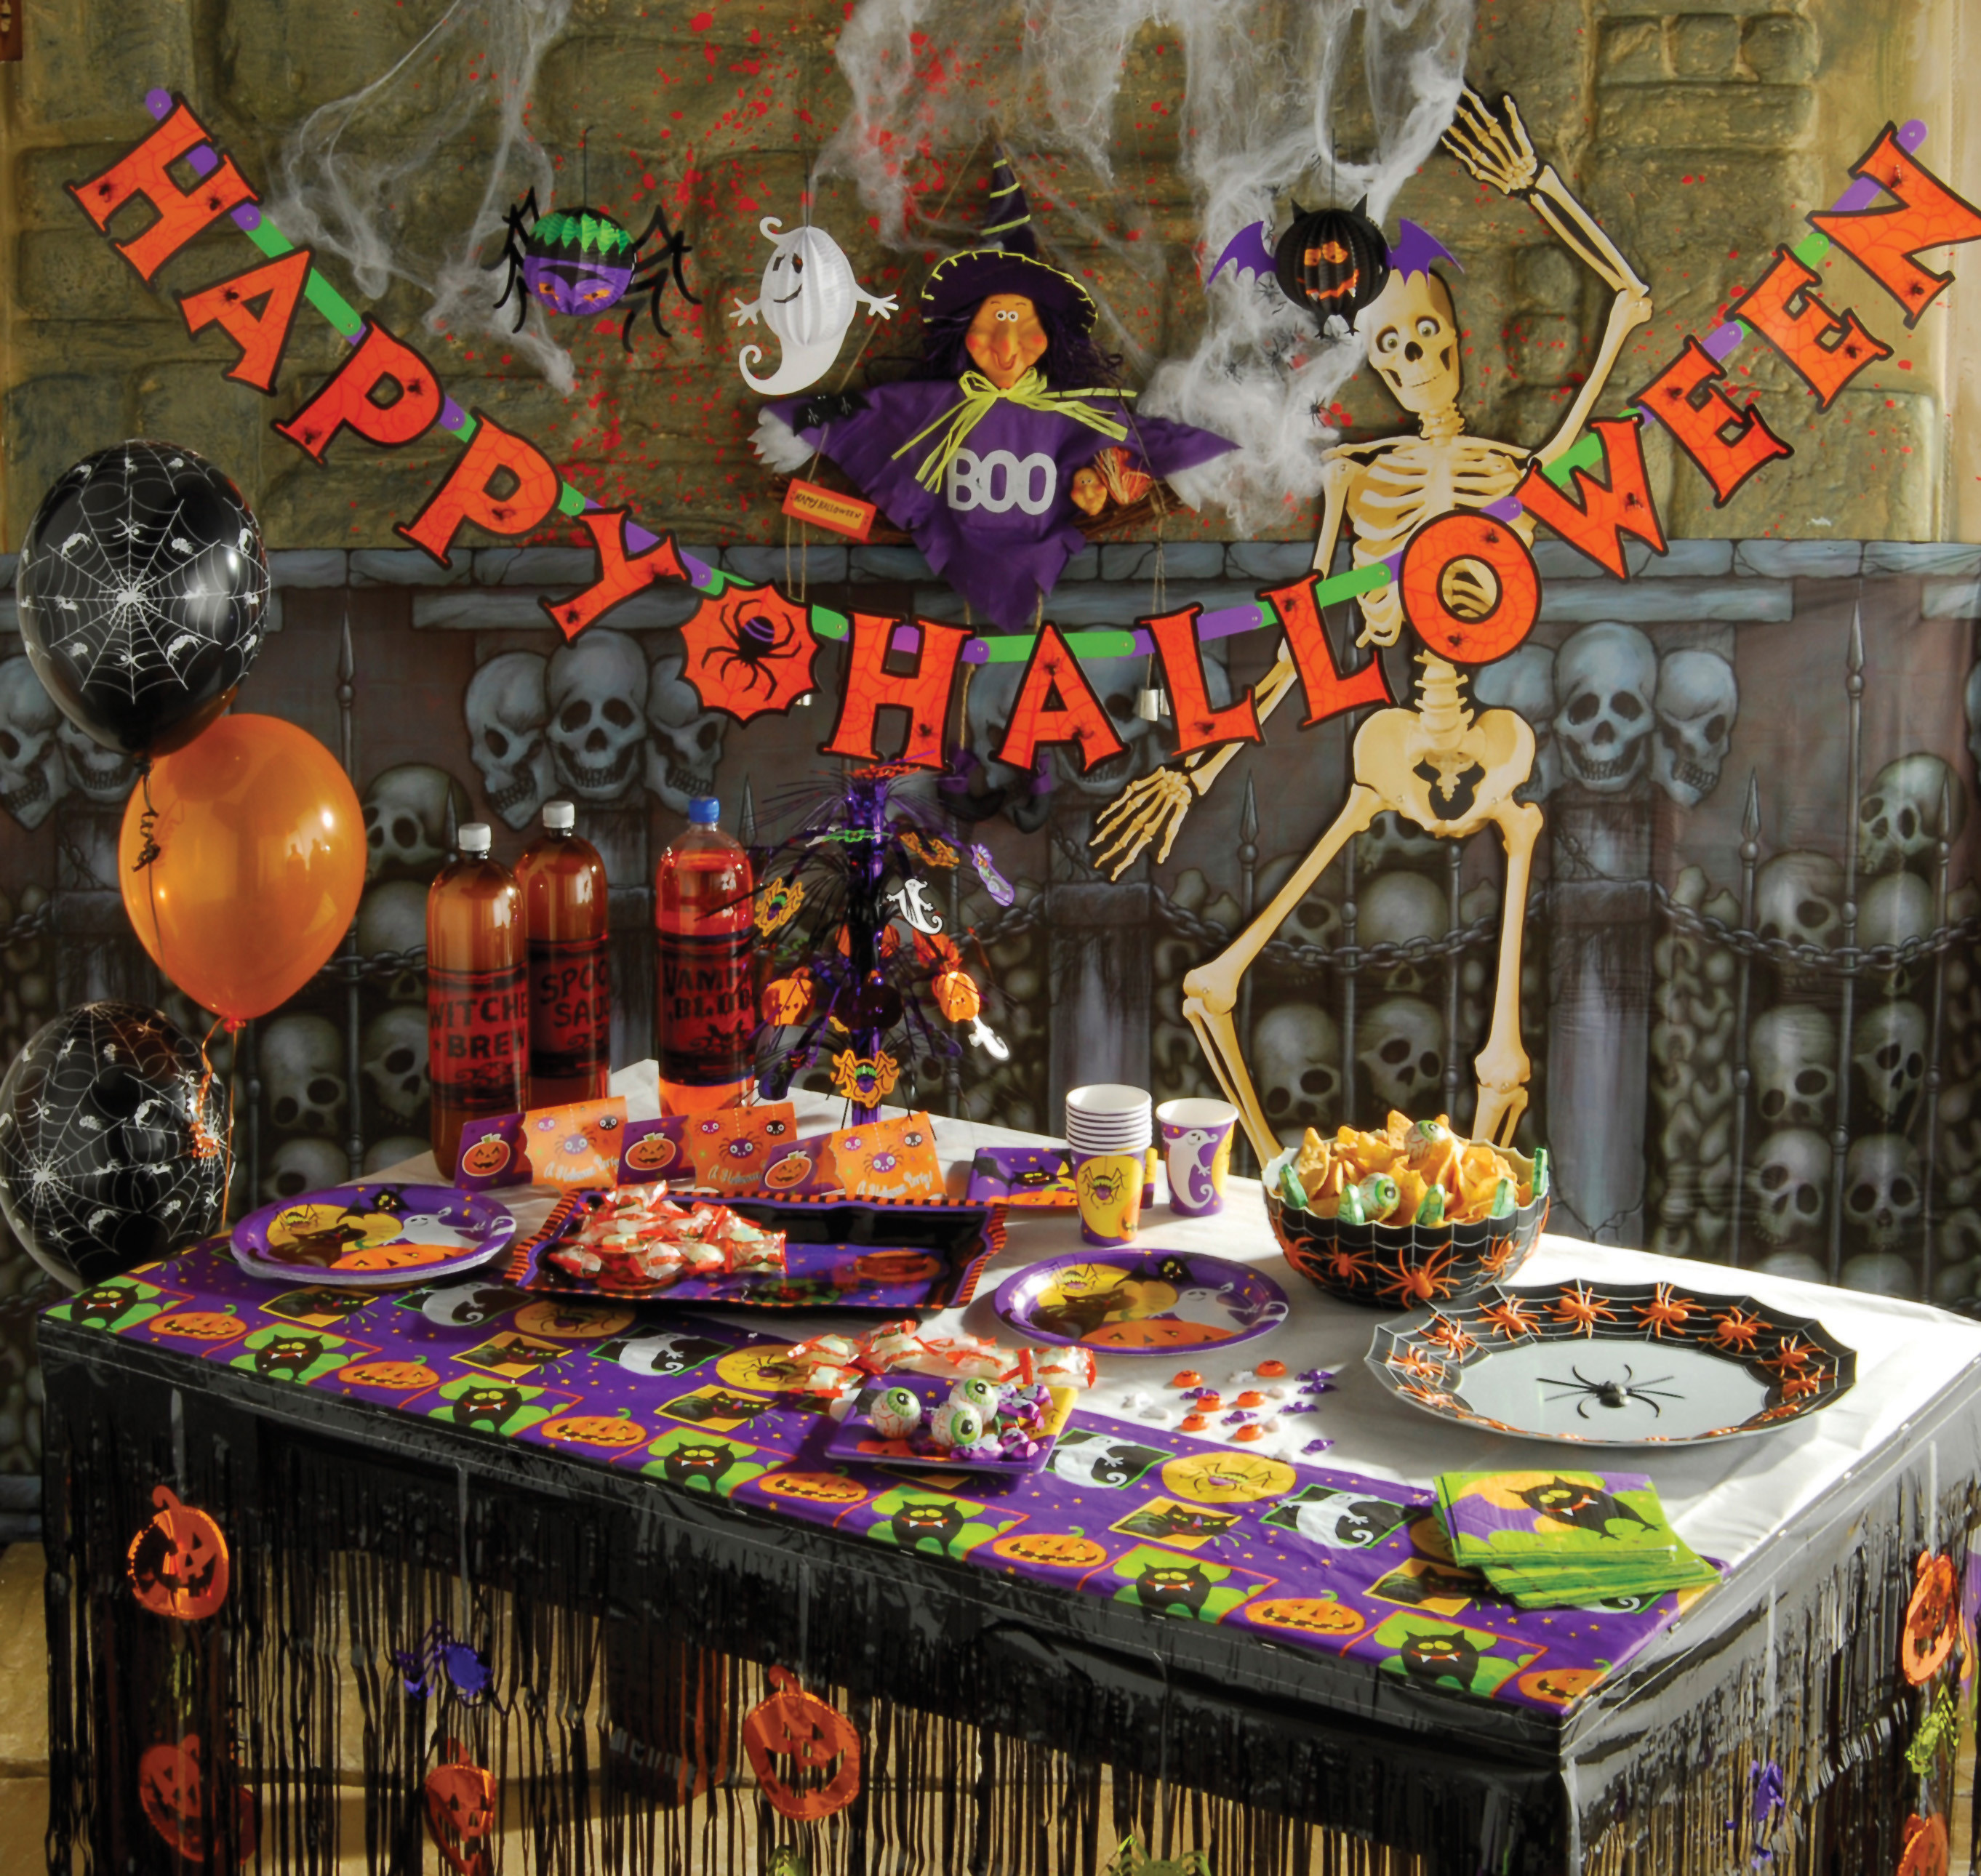 Halloween Home Party Ideas
 SPOOKTACULAR HALLOWEEN TRICKS & TREATS FROM MATALAN